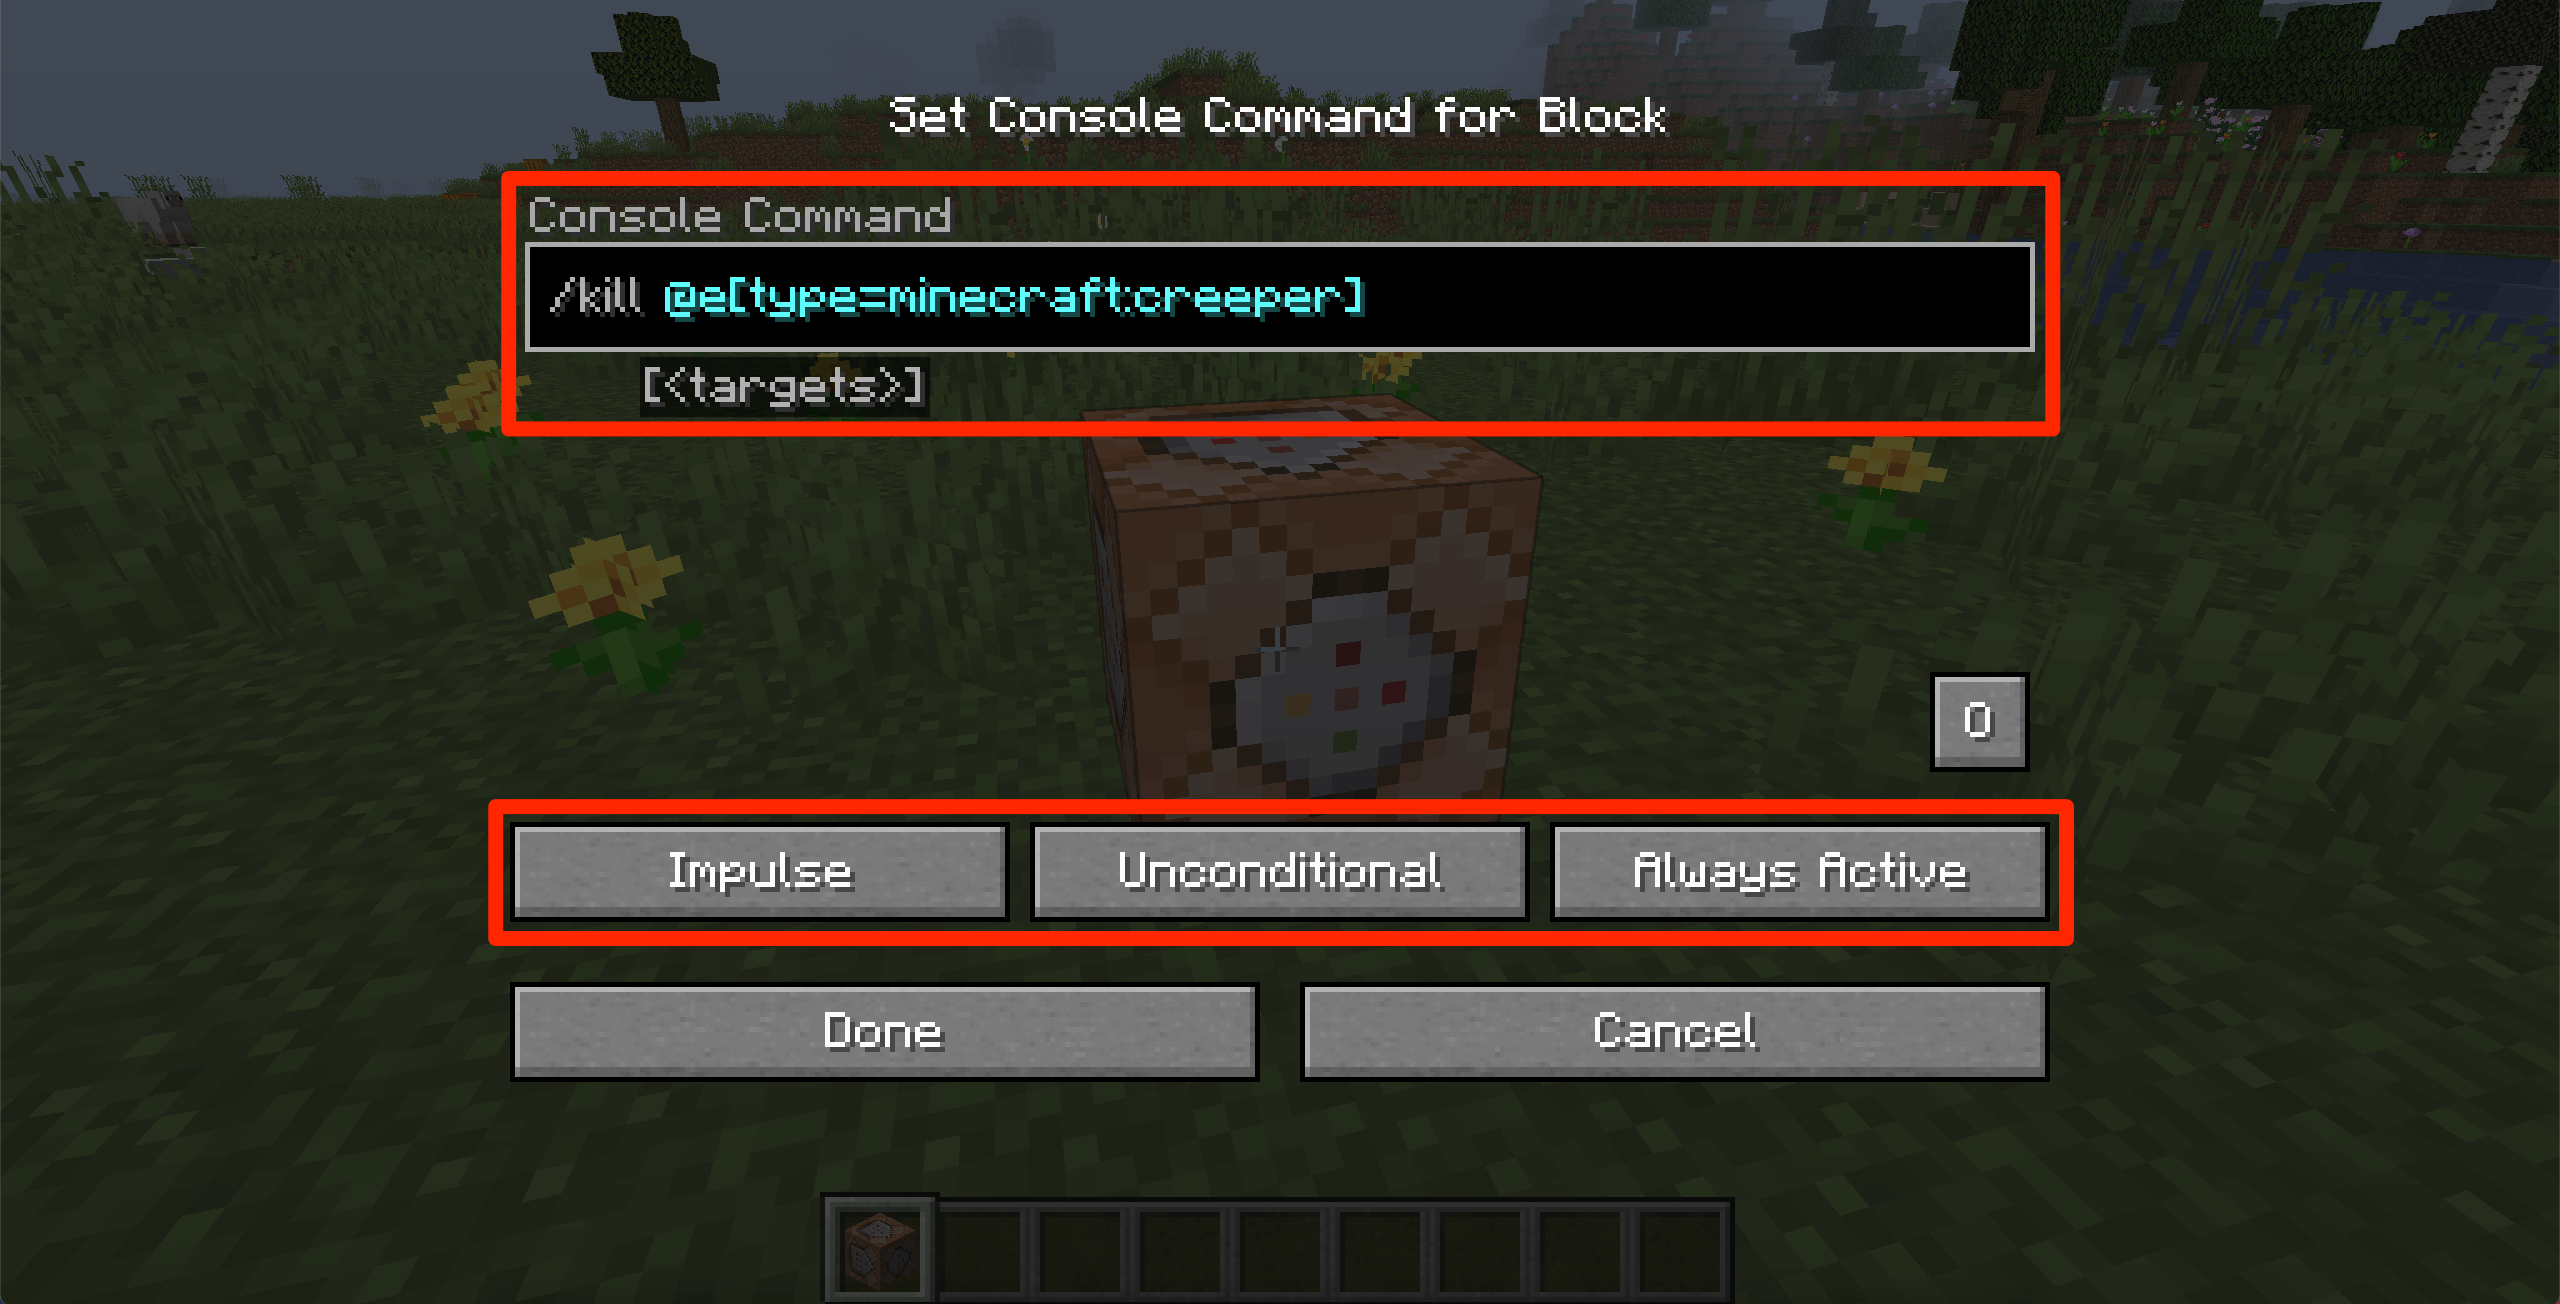 The command block settings menu in Minecraft.